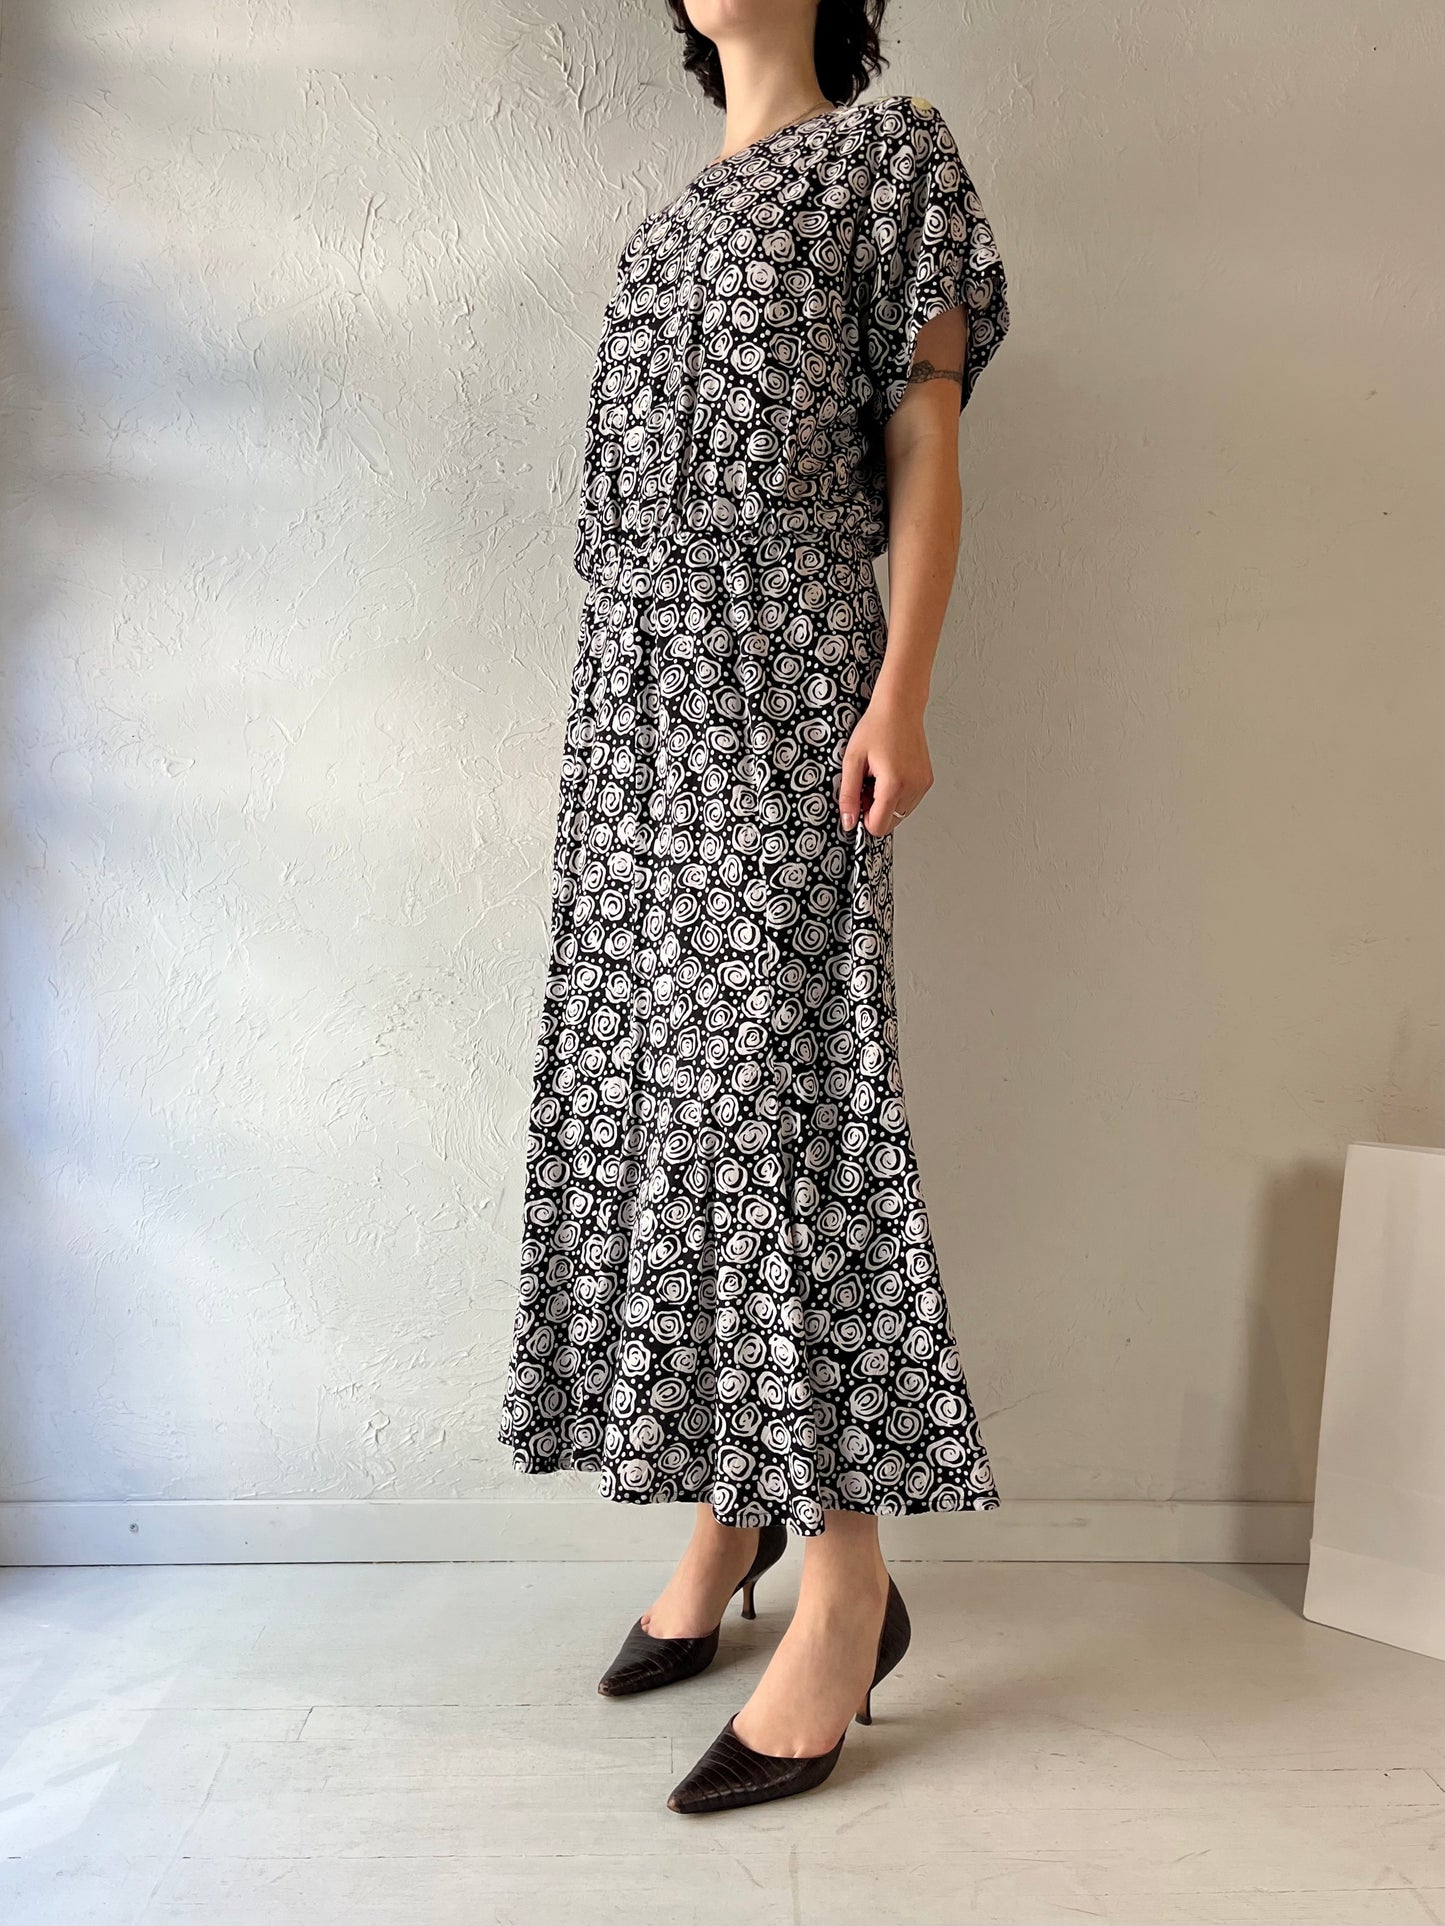 90s 'Liz Clairborne' Rayon Dress / Large